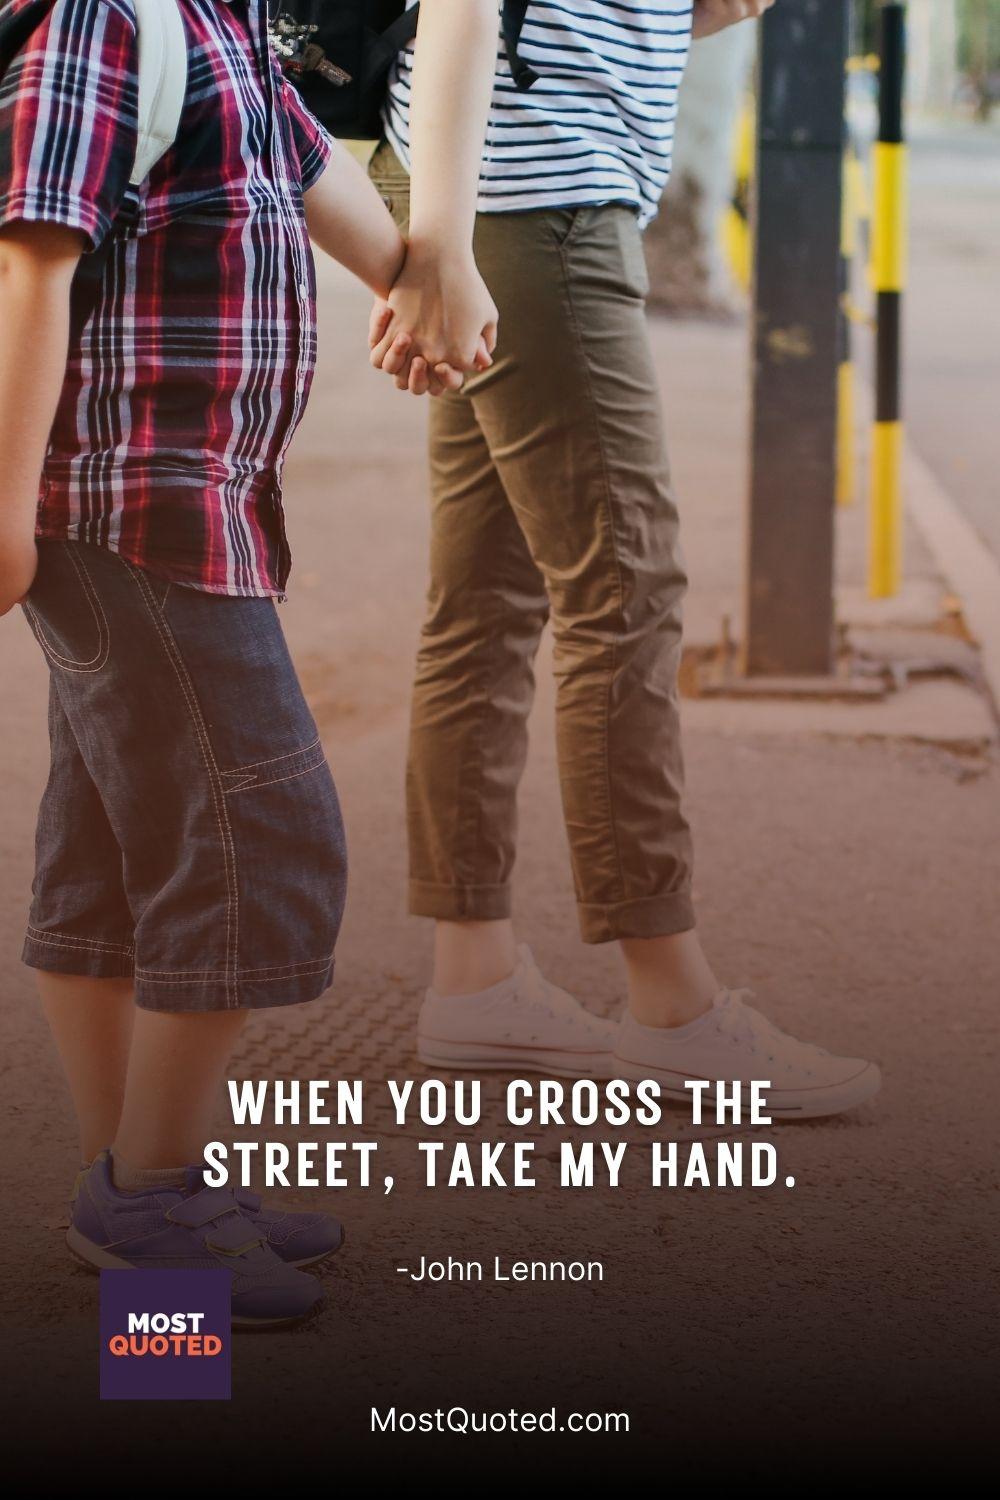 When you cross the street, take my hand. - John Lennon